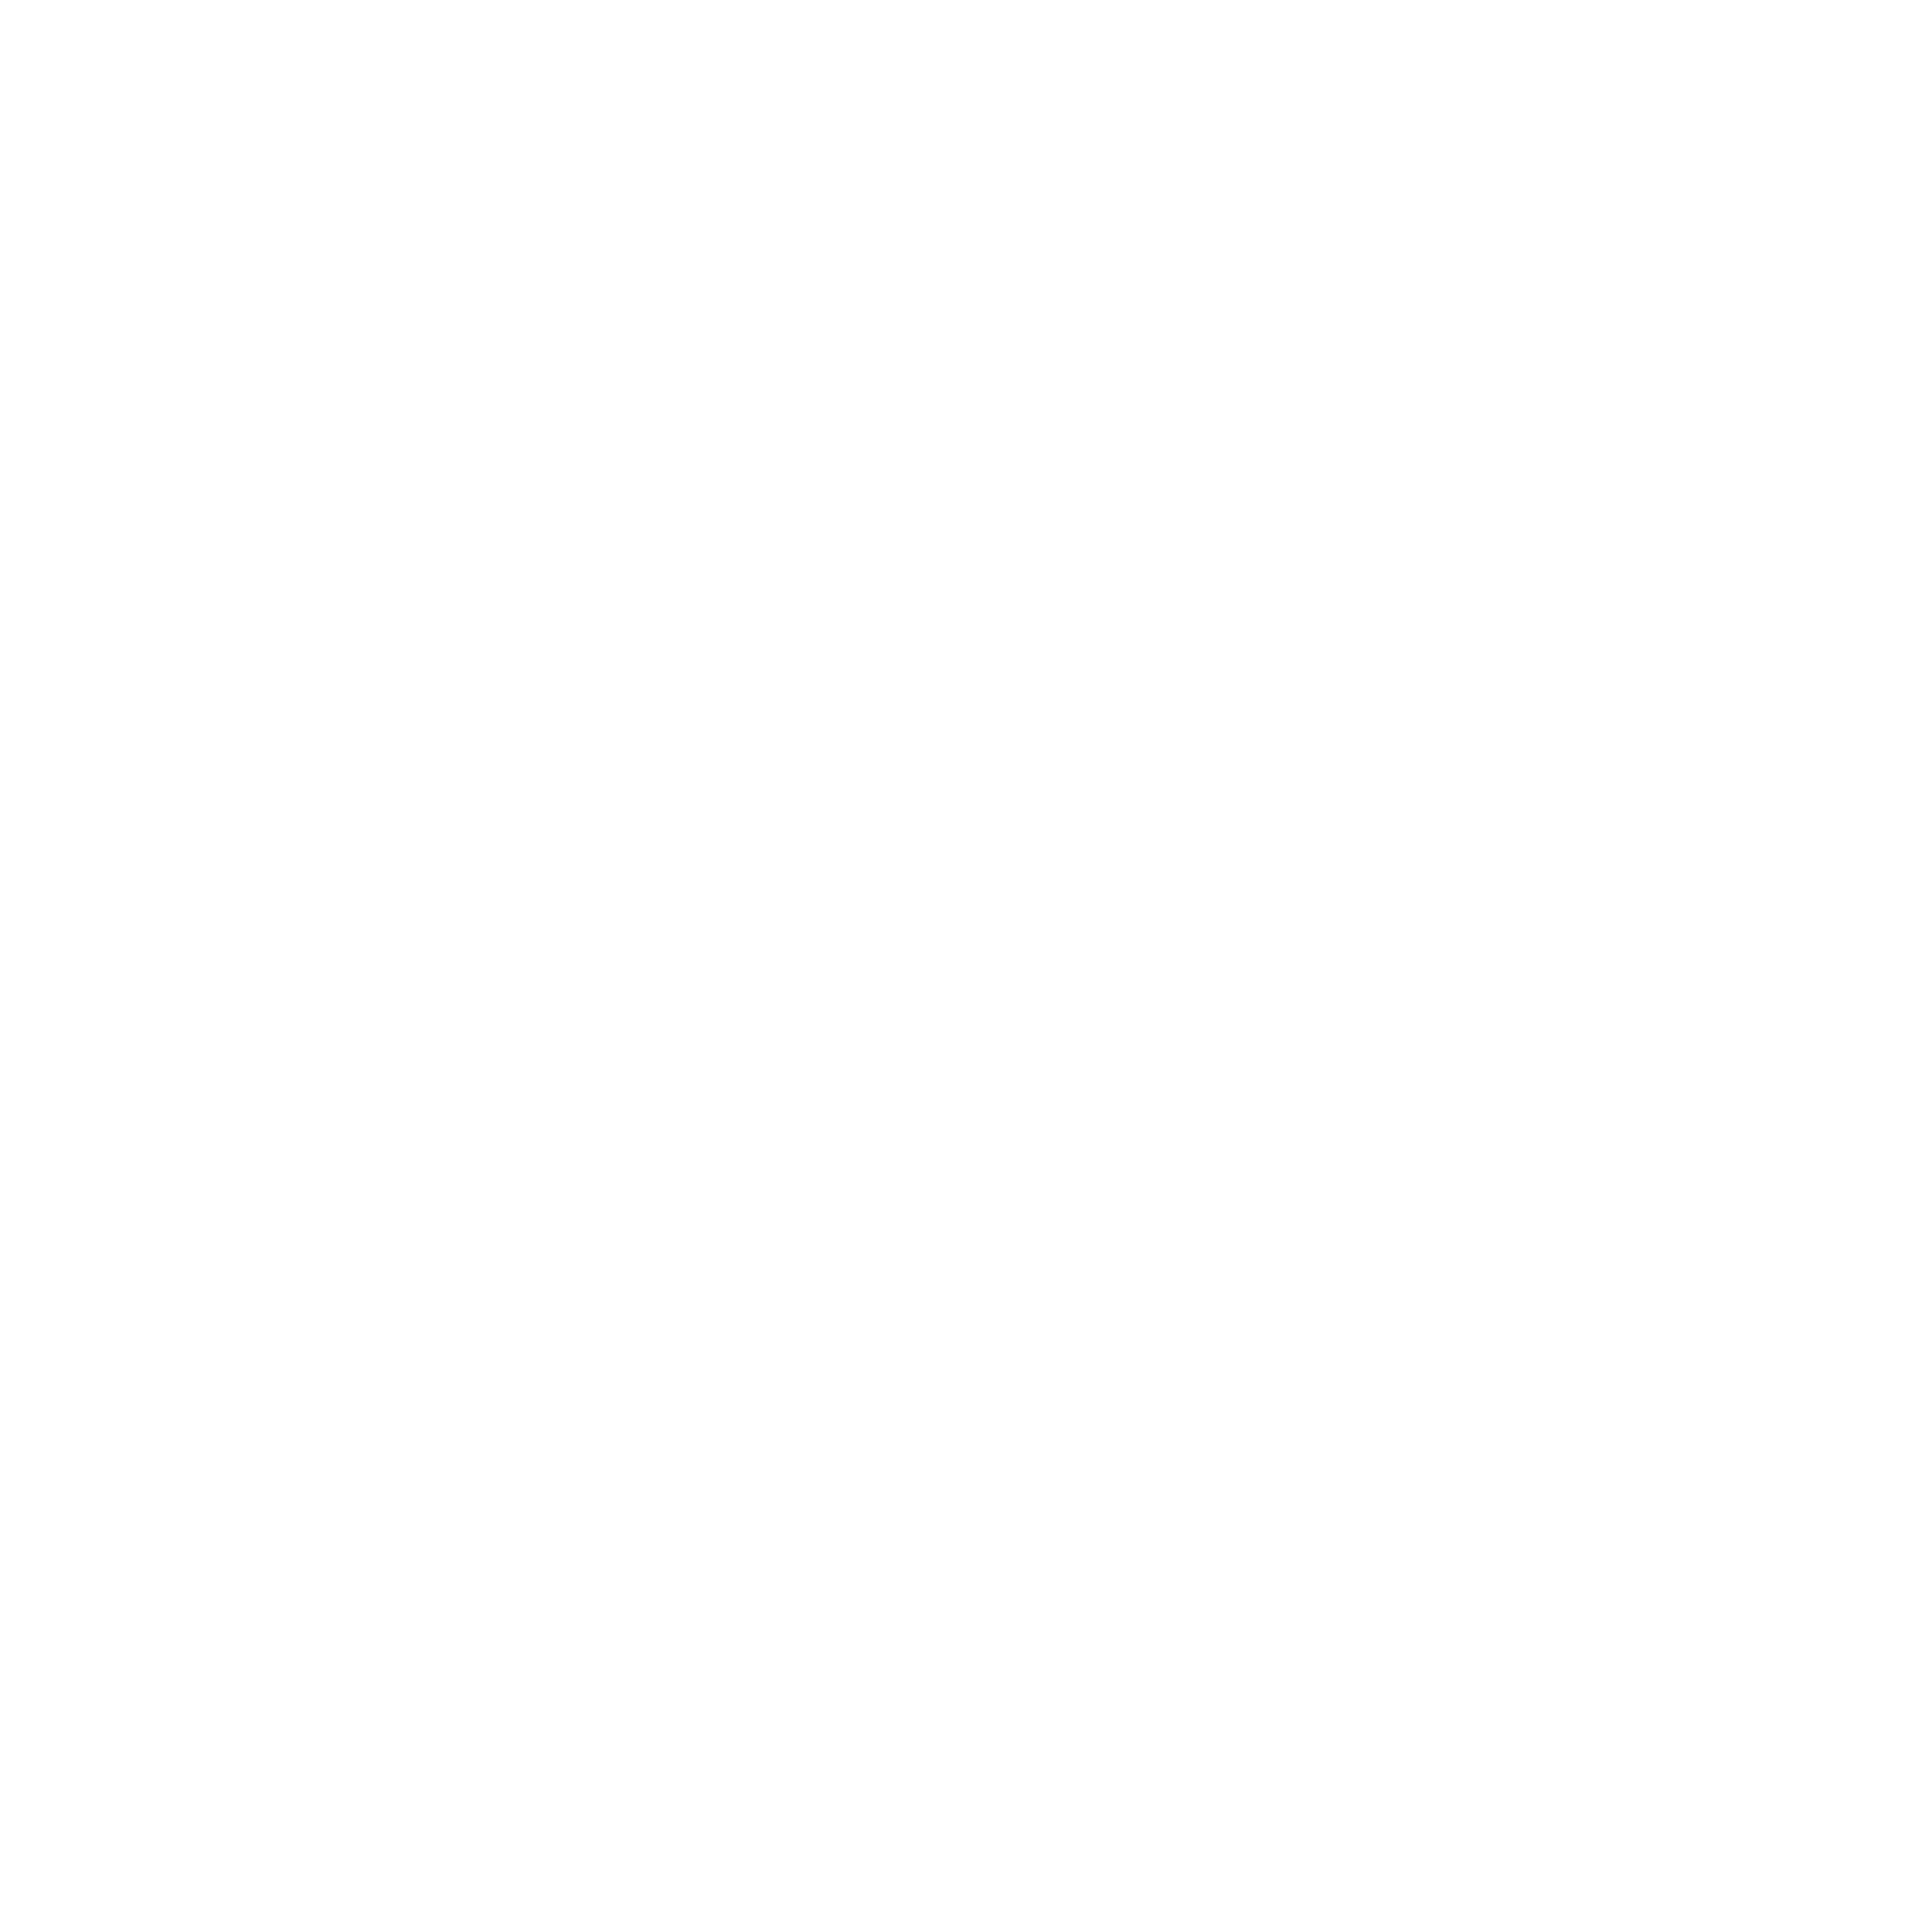 Urban Place